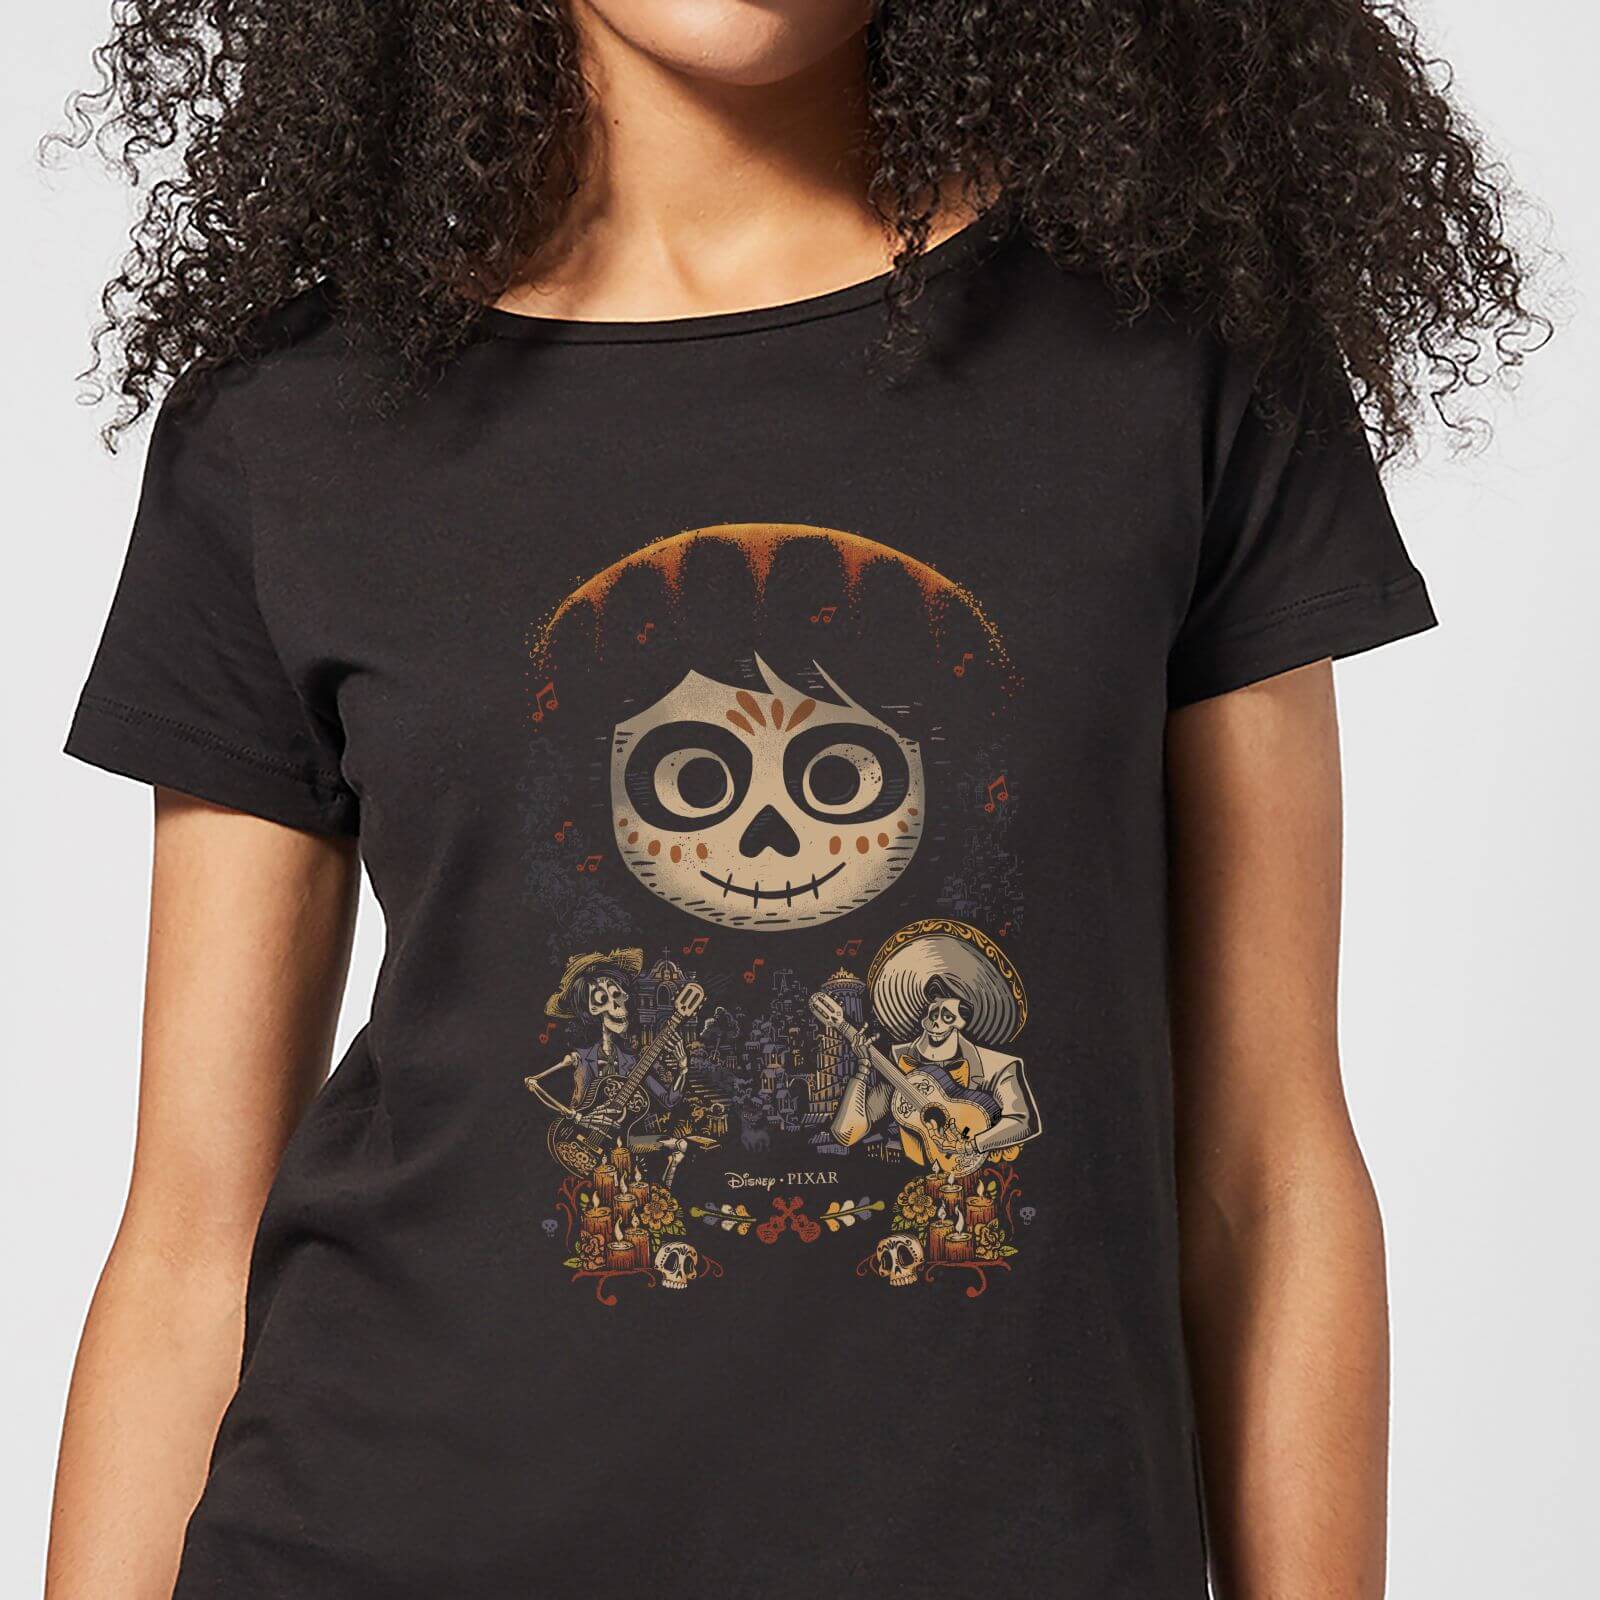 Coco Miguel Face Poster Women's T-Shirt - Black - M - Black